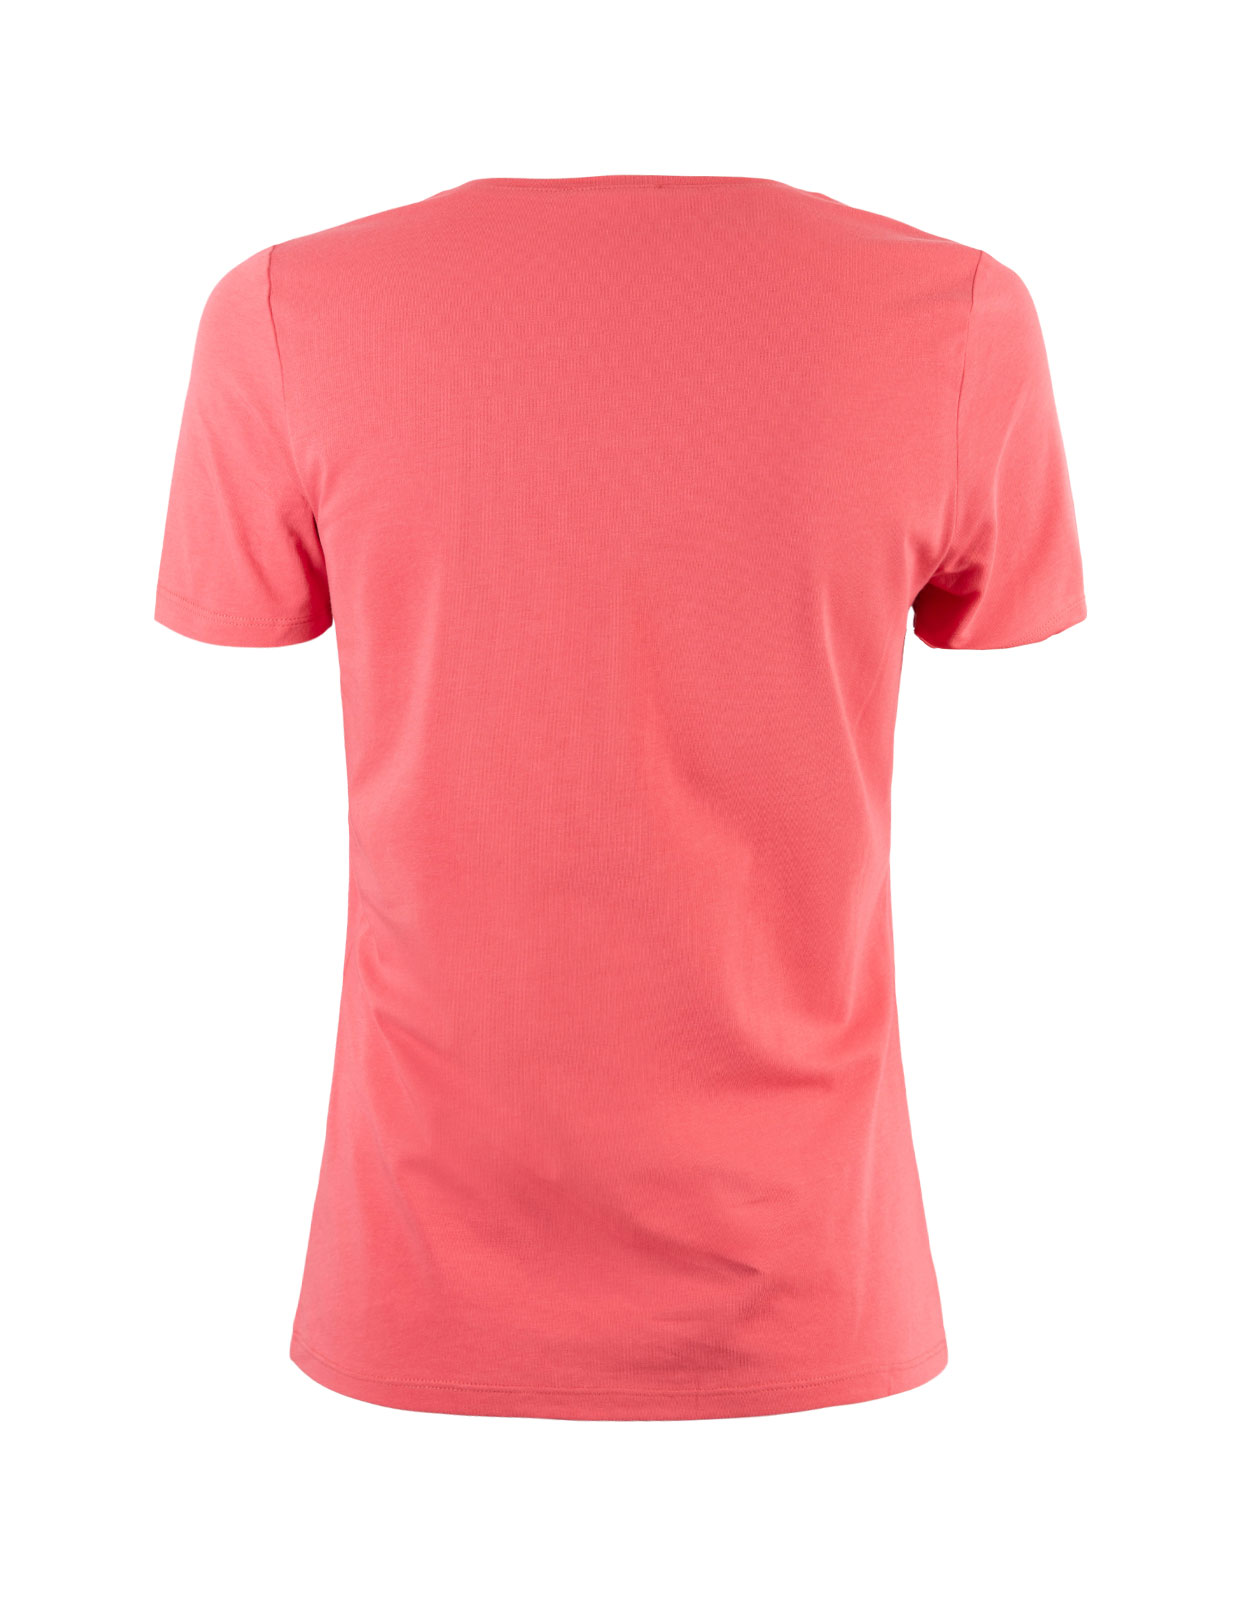 T-Shirt Ceriserosa Stl 34